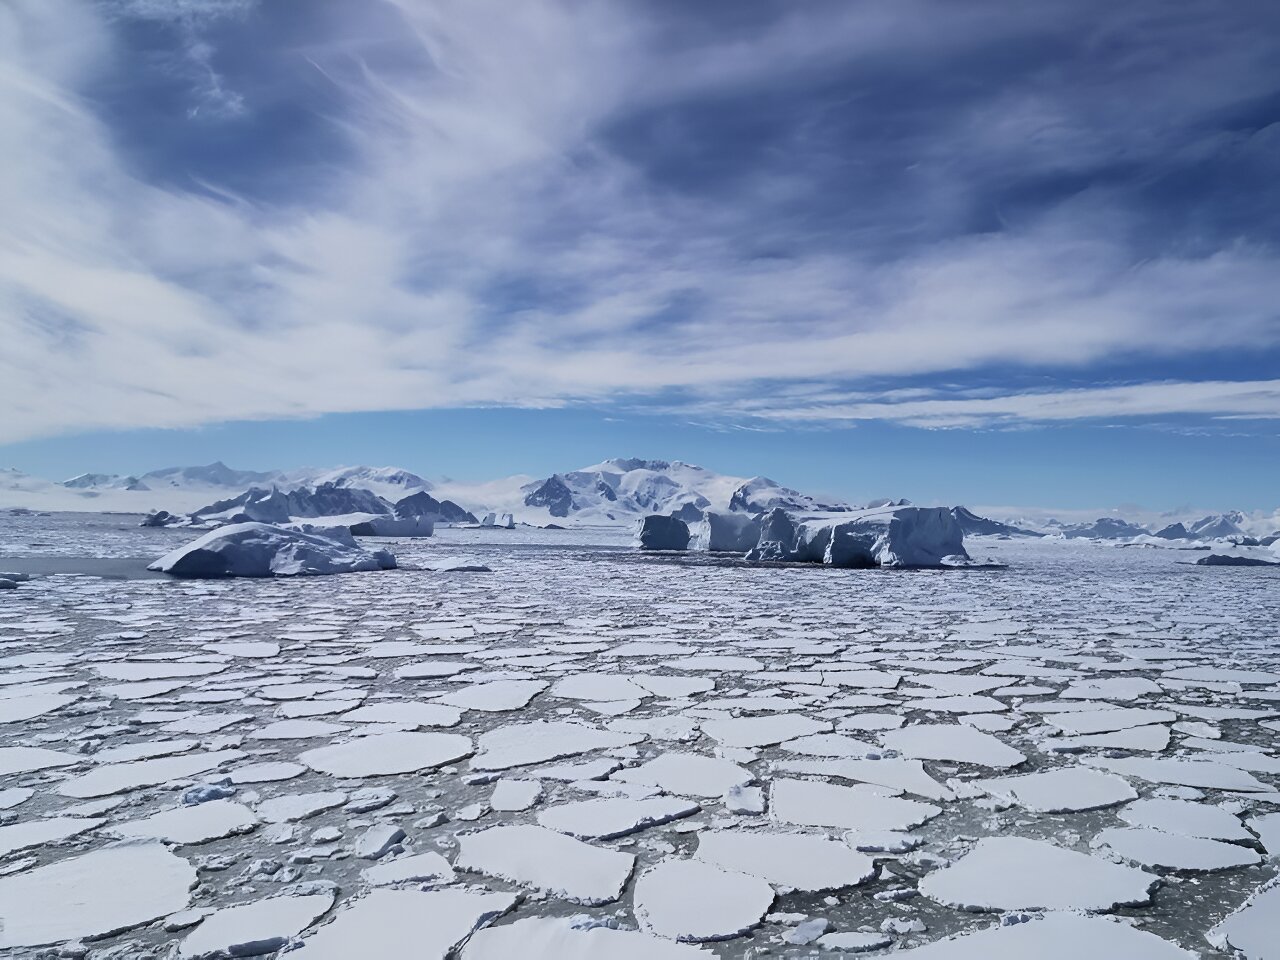 Sluggish Start for Arctic Sea Ice Freeze-Up